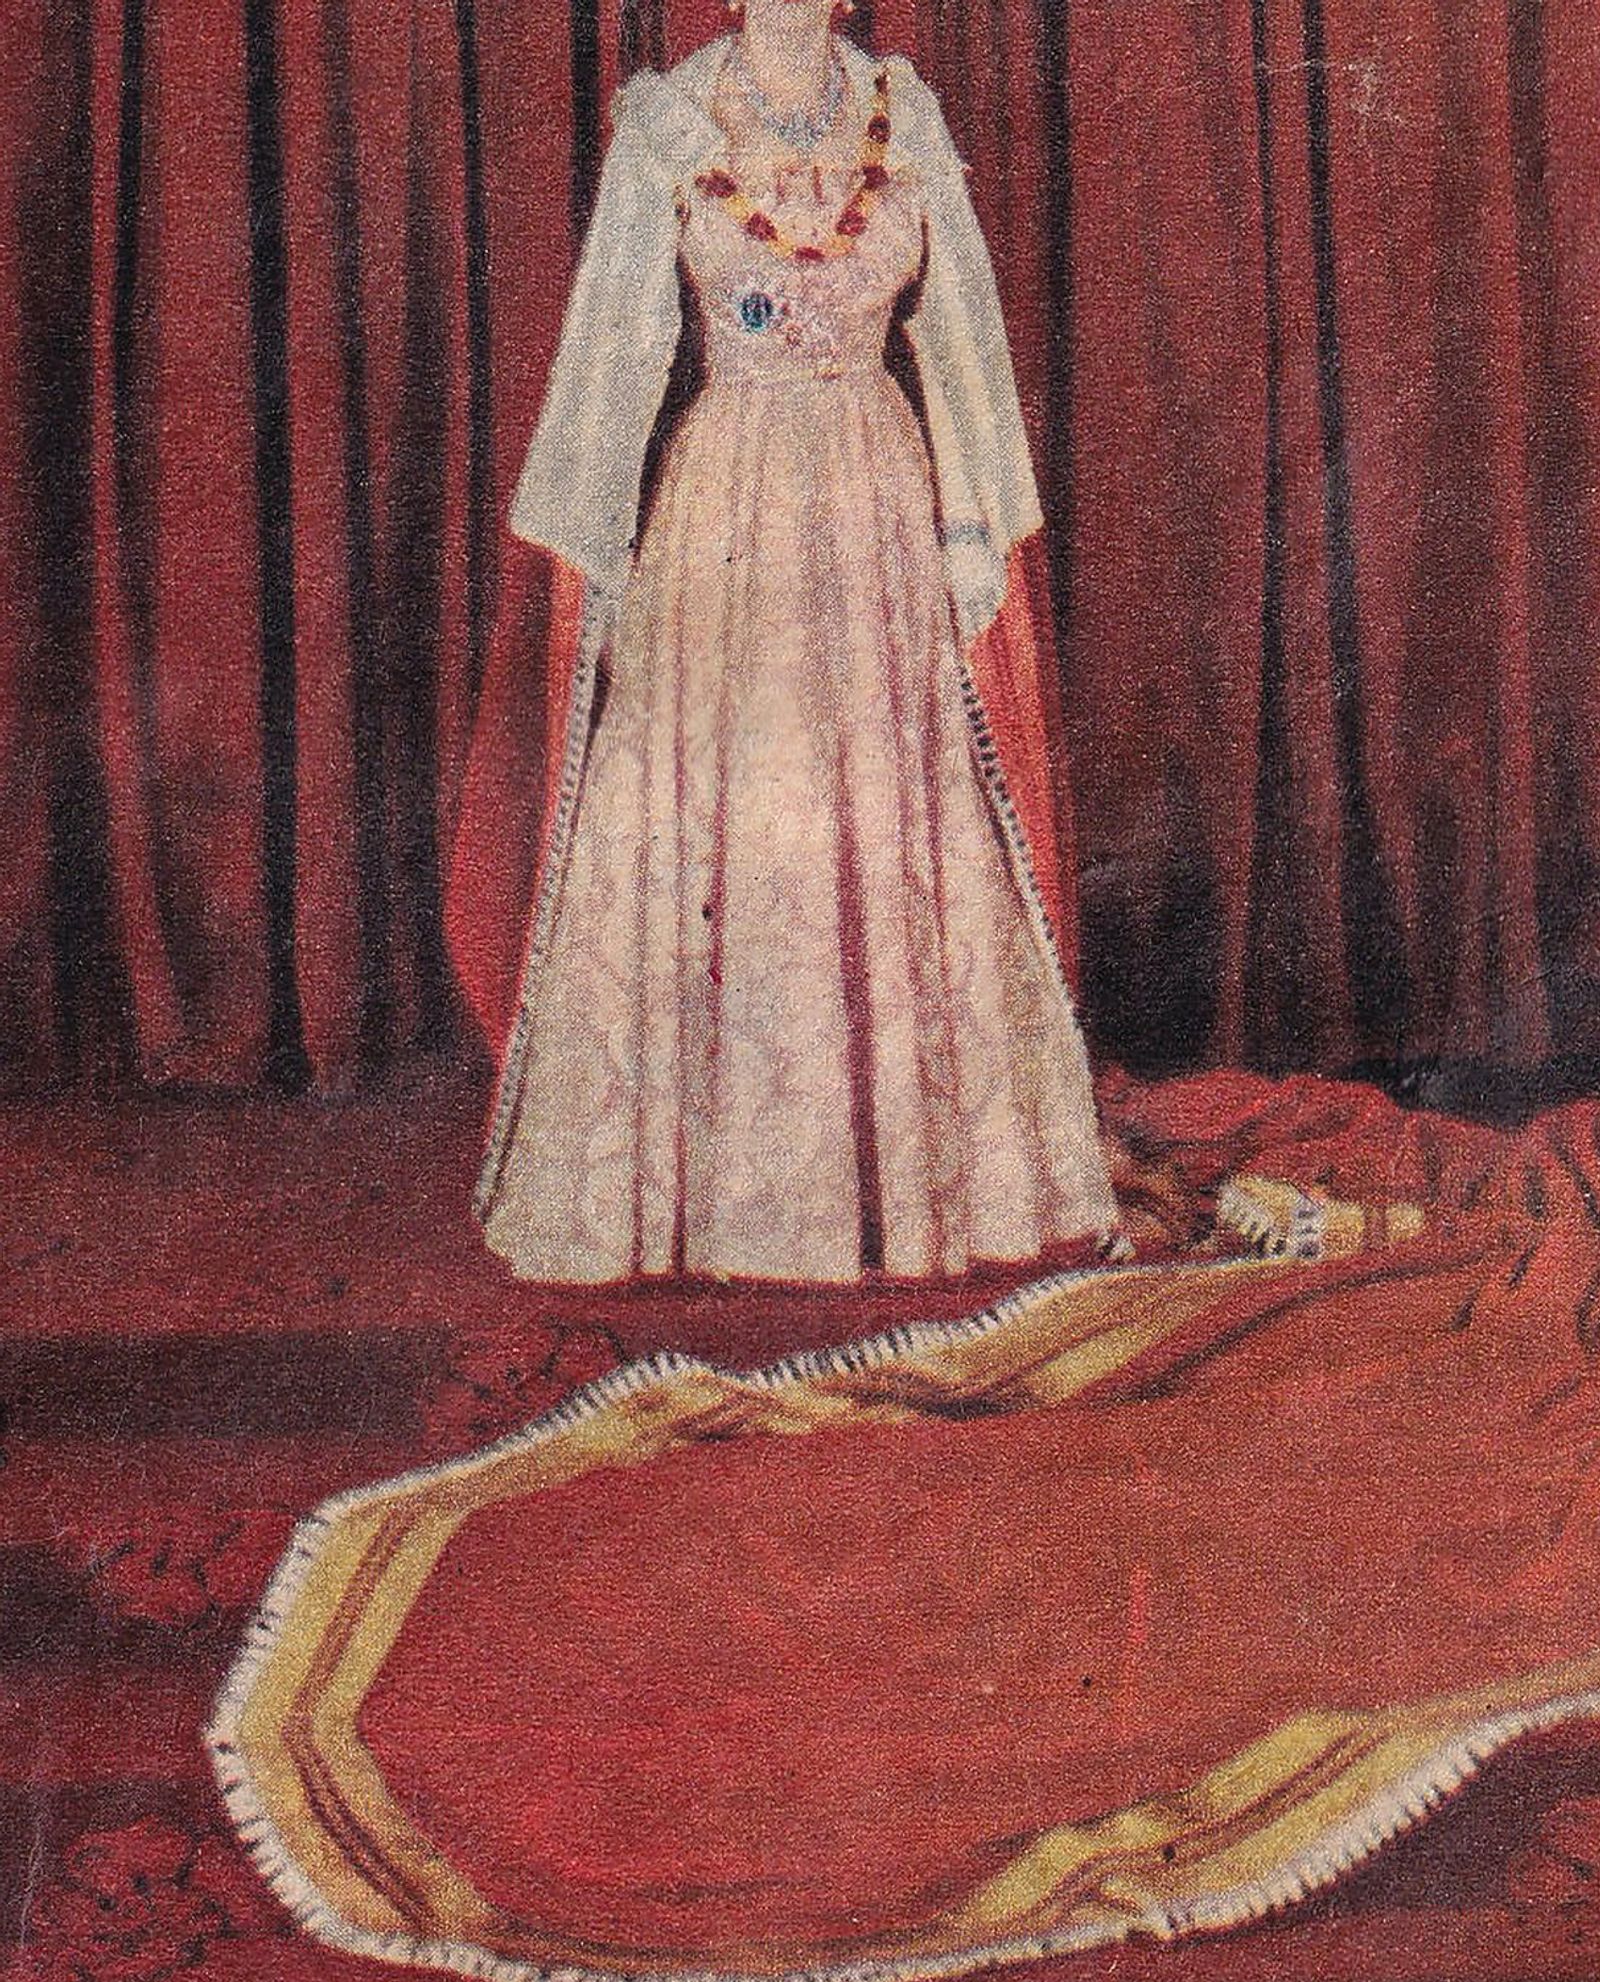 © Erin Lee - Details of the Queen's coronation gown.